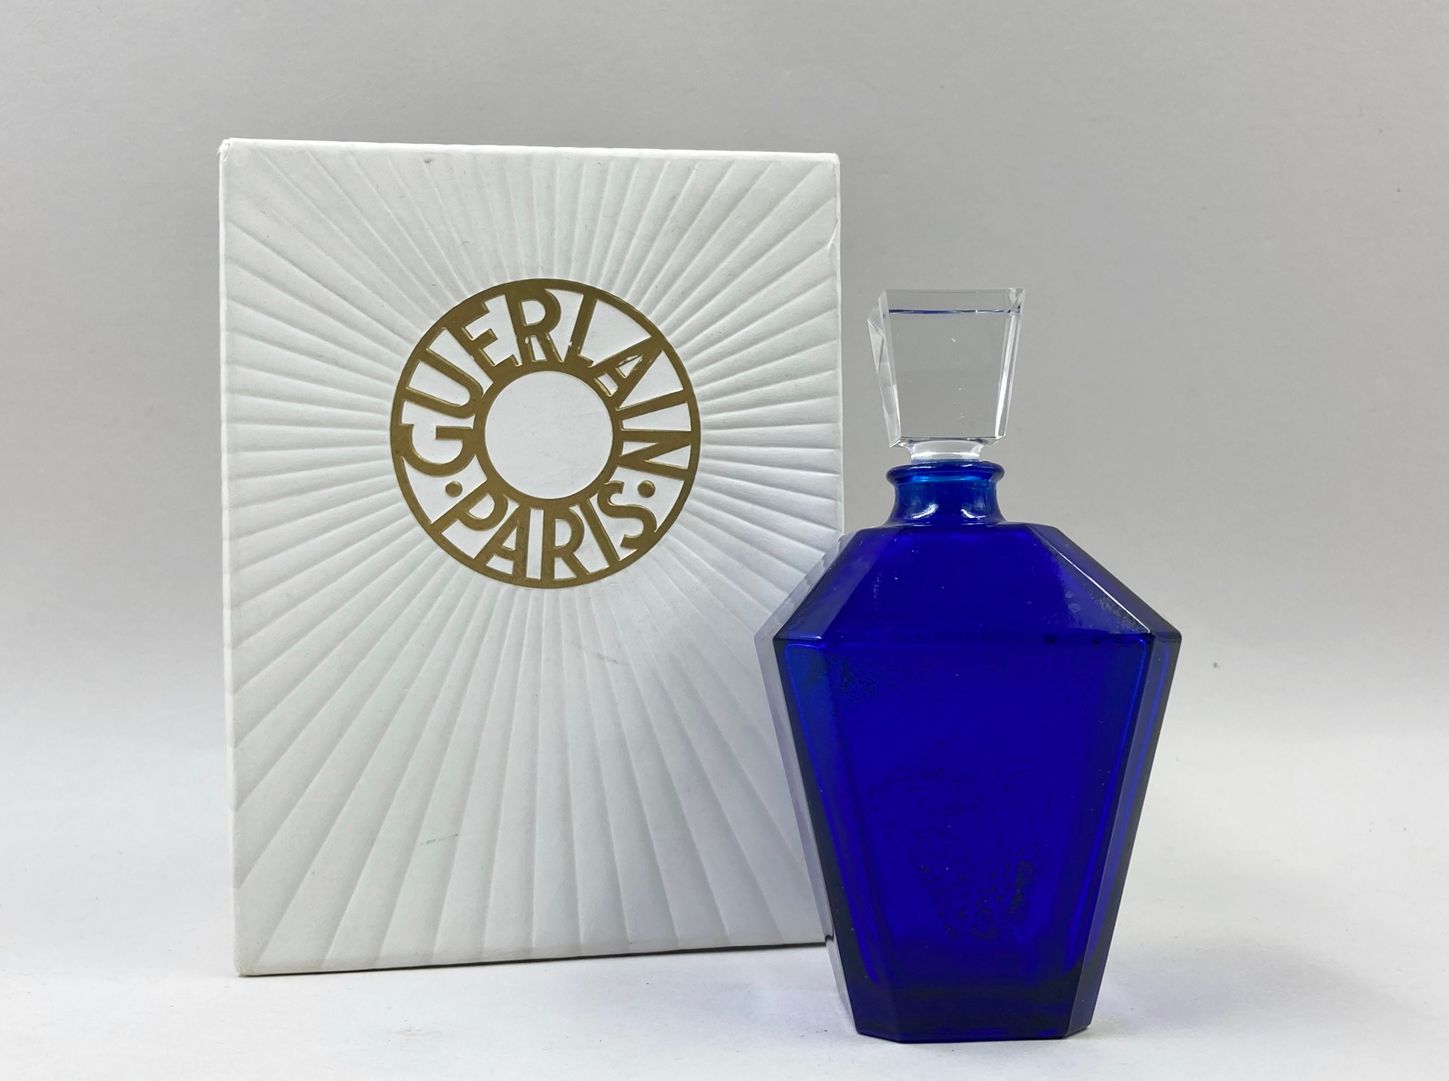 Null GUERLAIN "刘 "字瓶

蓝色玻璃瓶，"灯笼 "型。无色玻璃瓶塞。底部的圆形标签上写着 "Guerlain Liu Paris"。白色的盒子，&hellip;